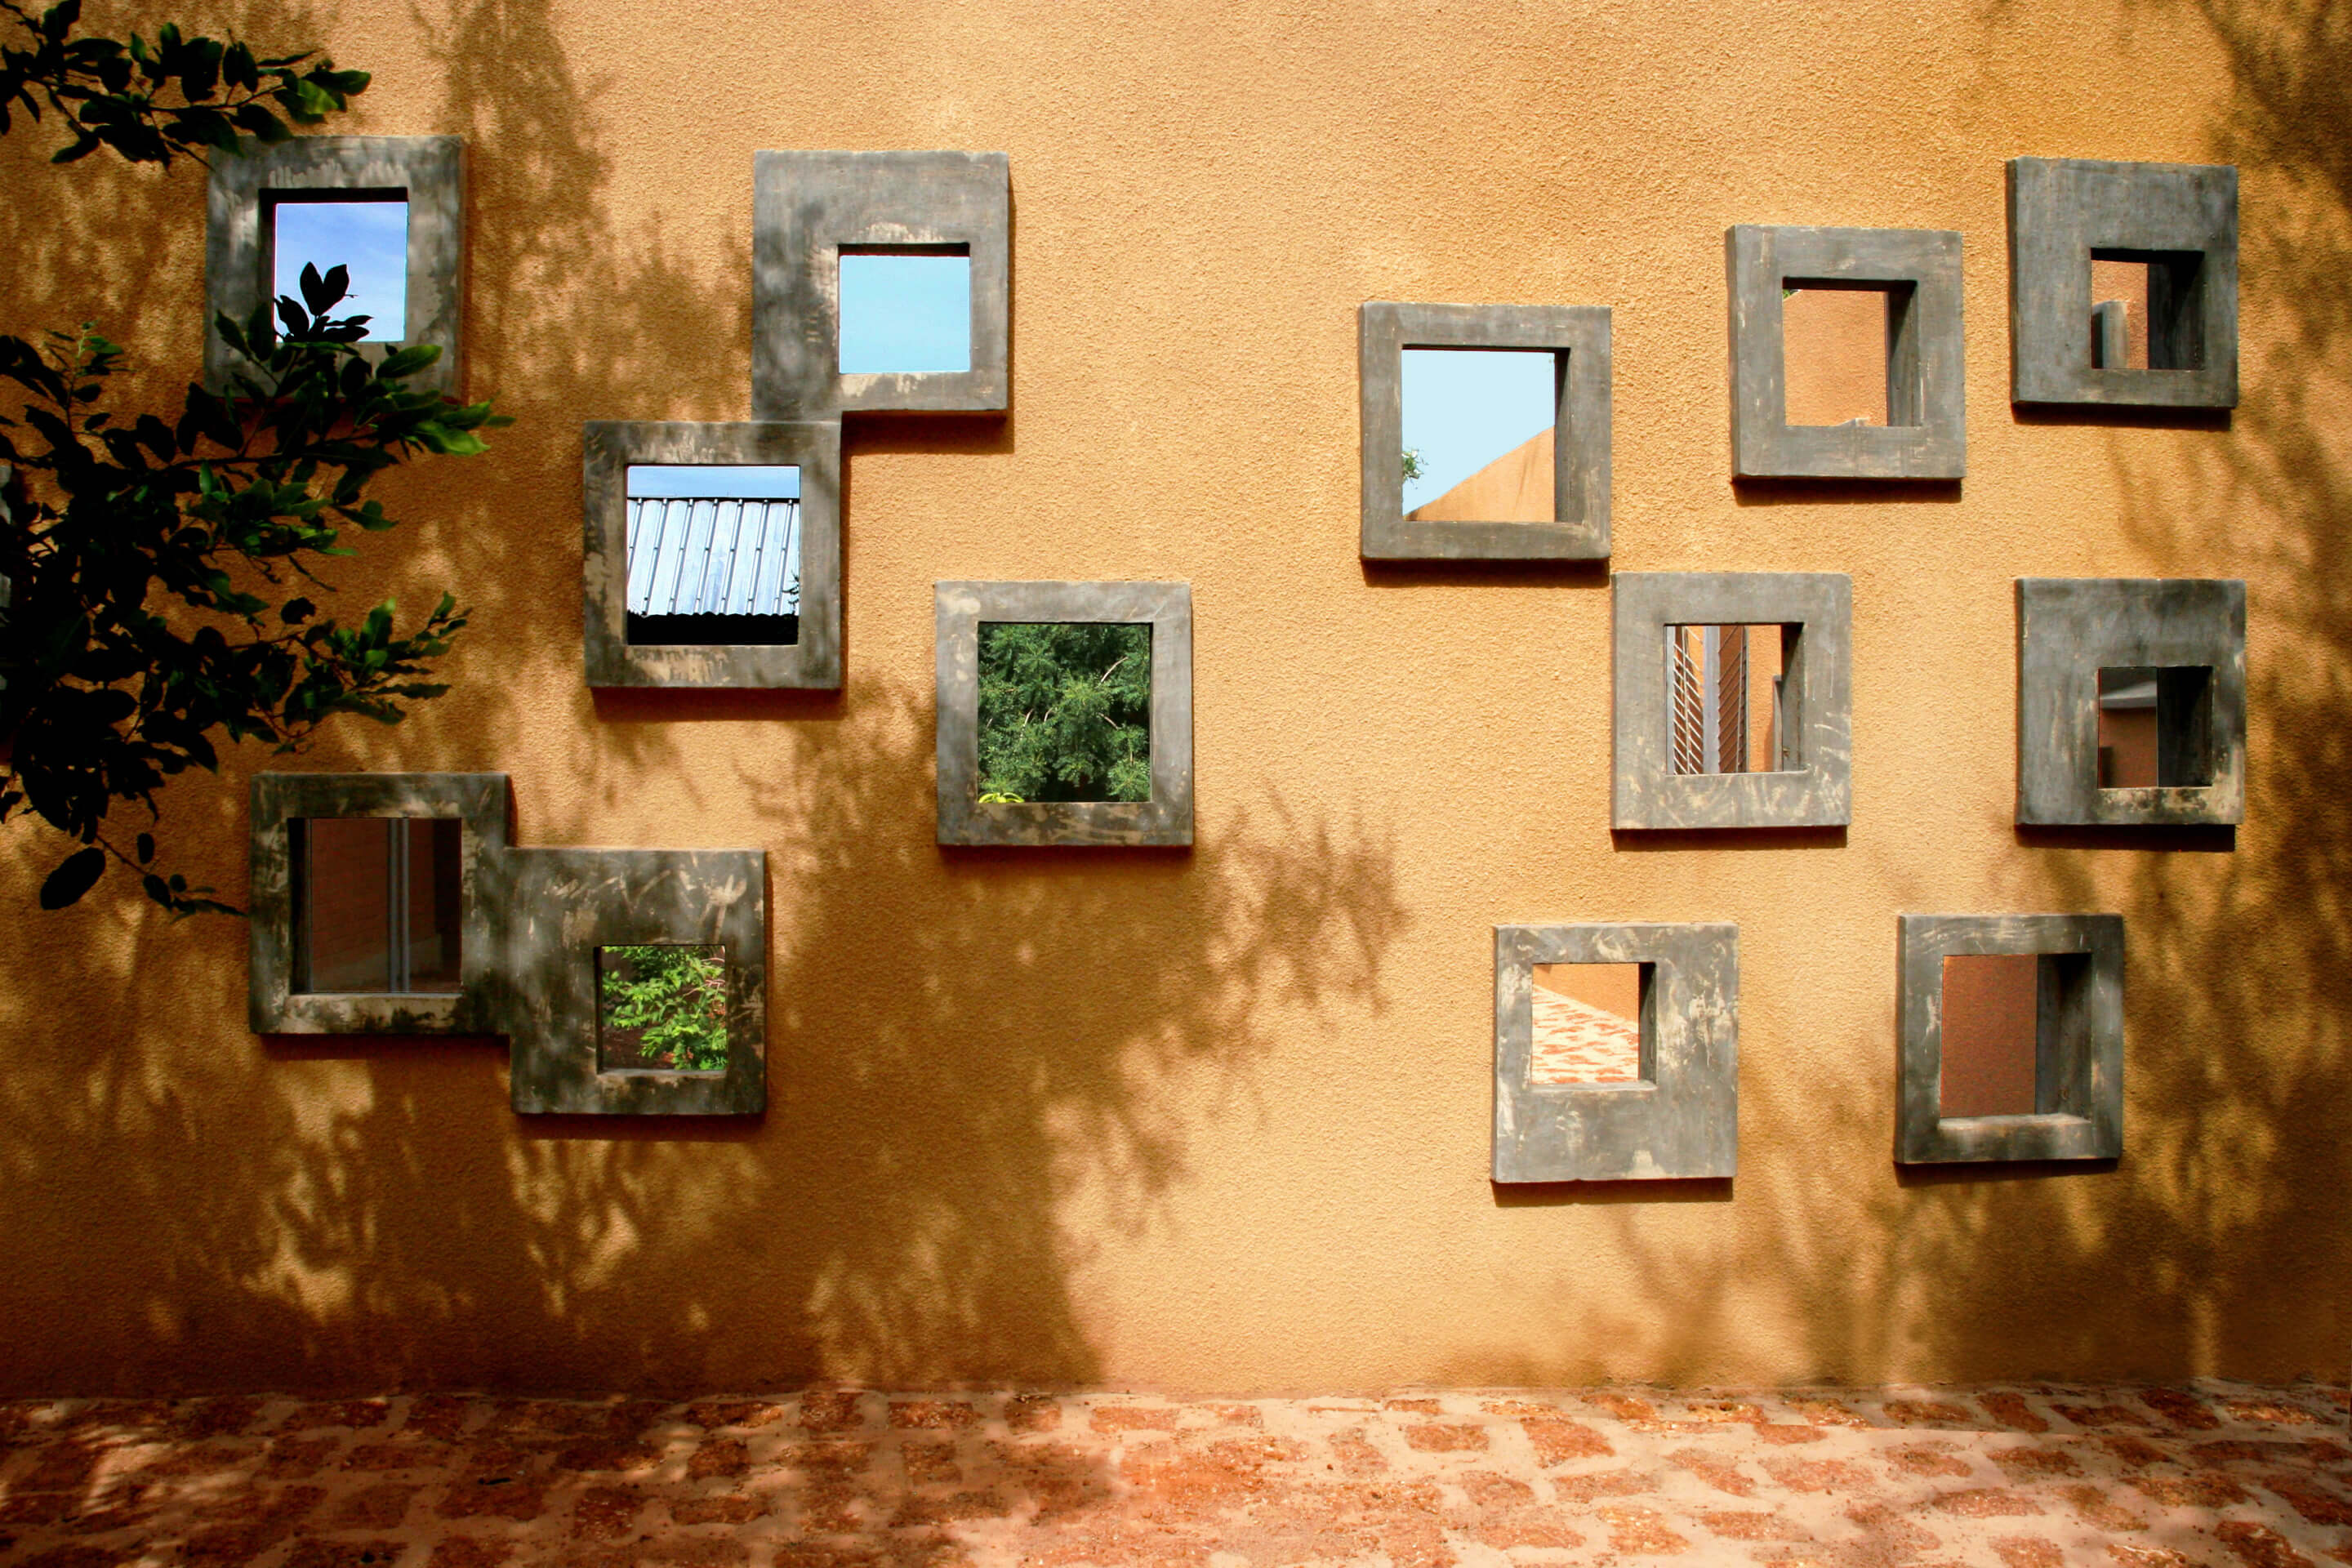 small windows on a clay mud wall